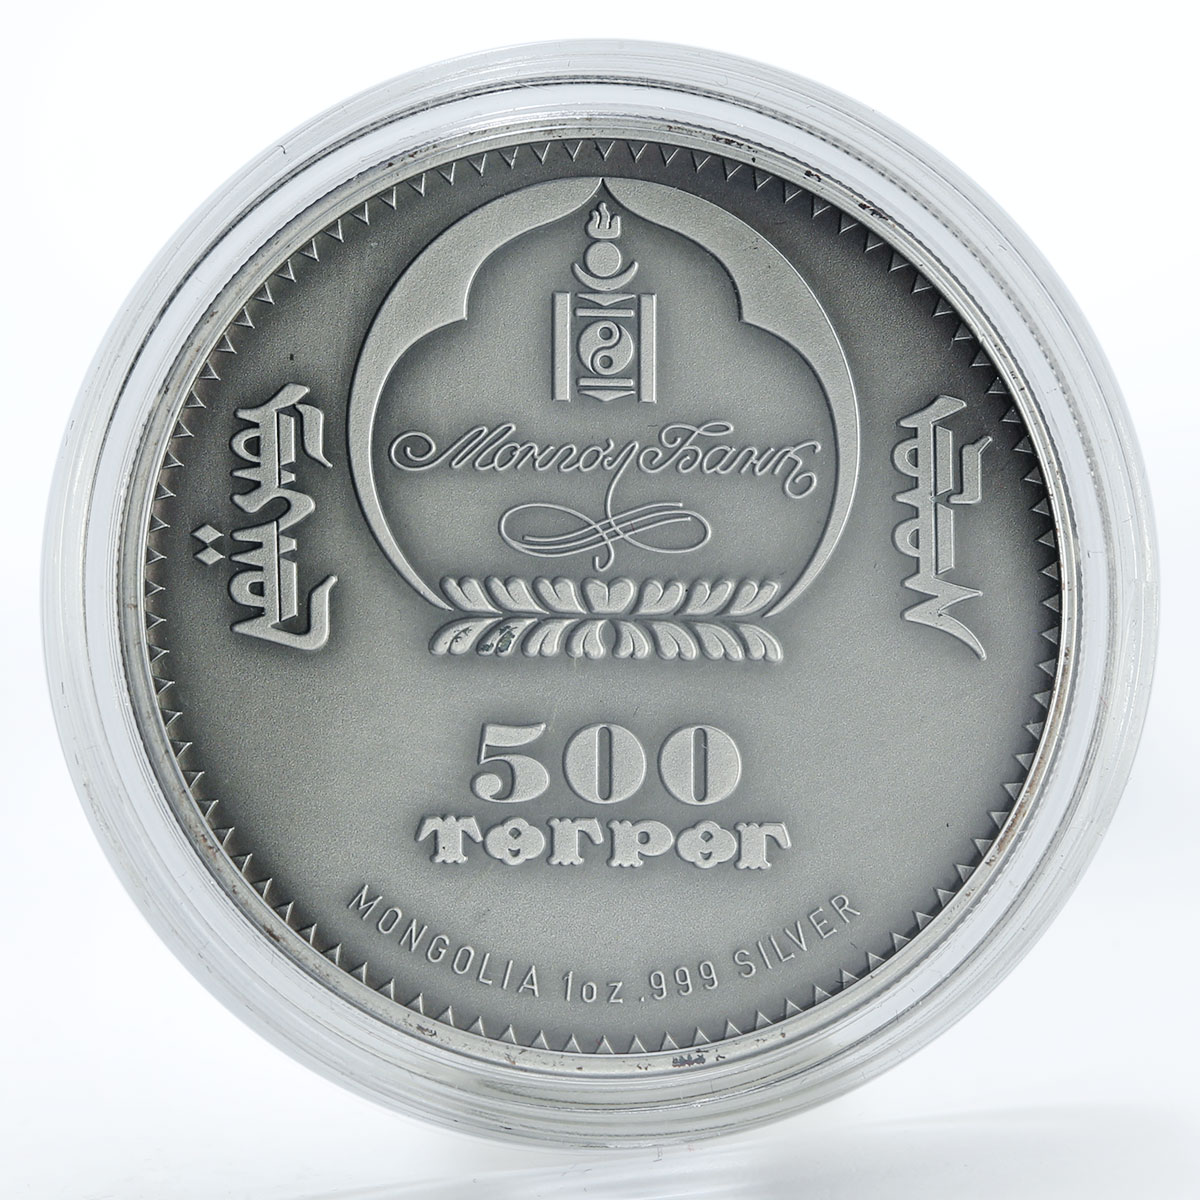 Mongolia 500 togrog Argali Ovis ammon swarovski silver coin 2013